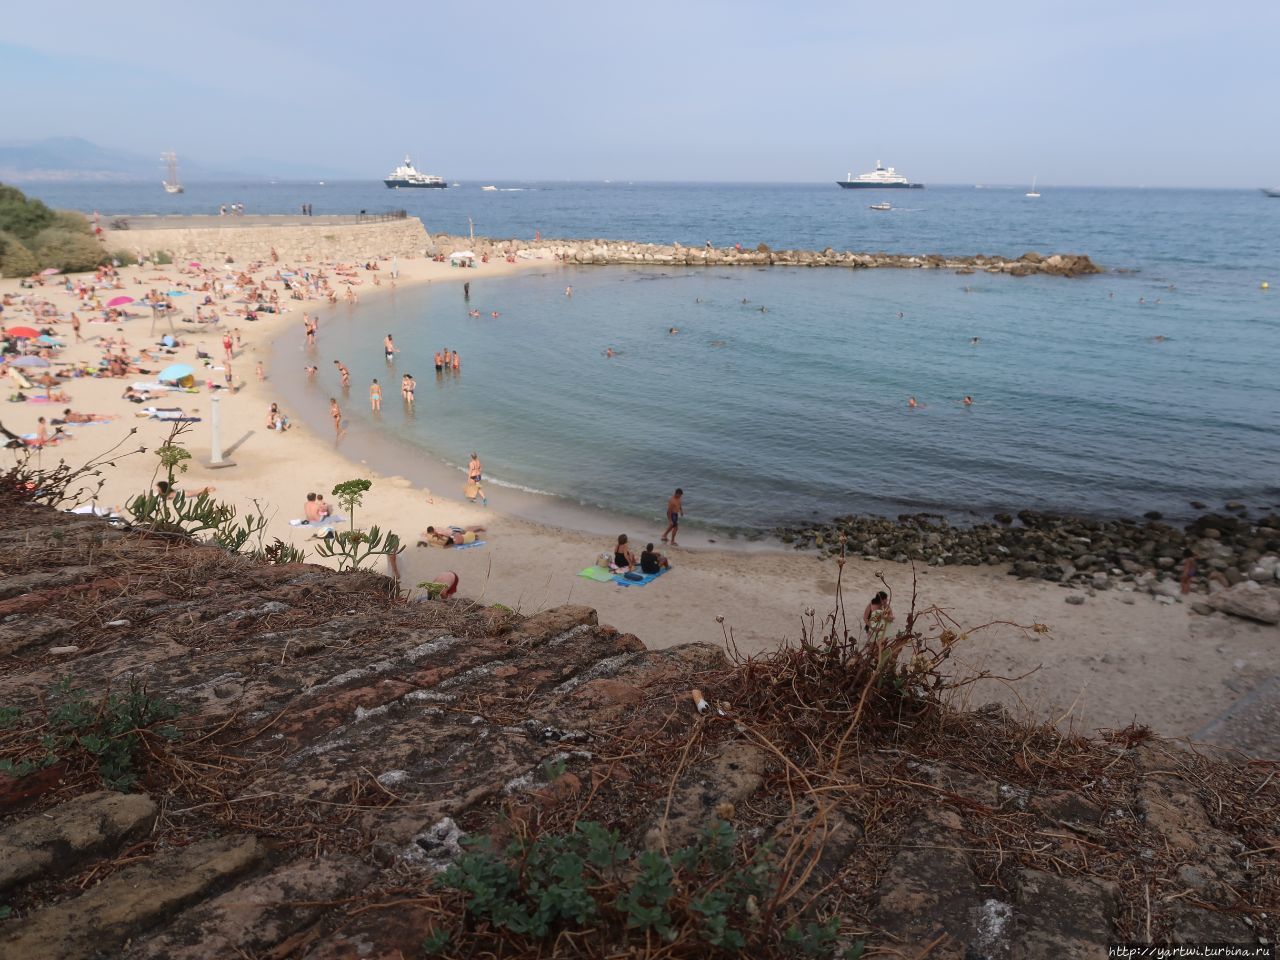 Пляж де ля Граветт. Вид с набережной. Антиб, Франция